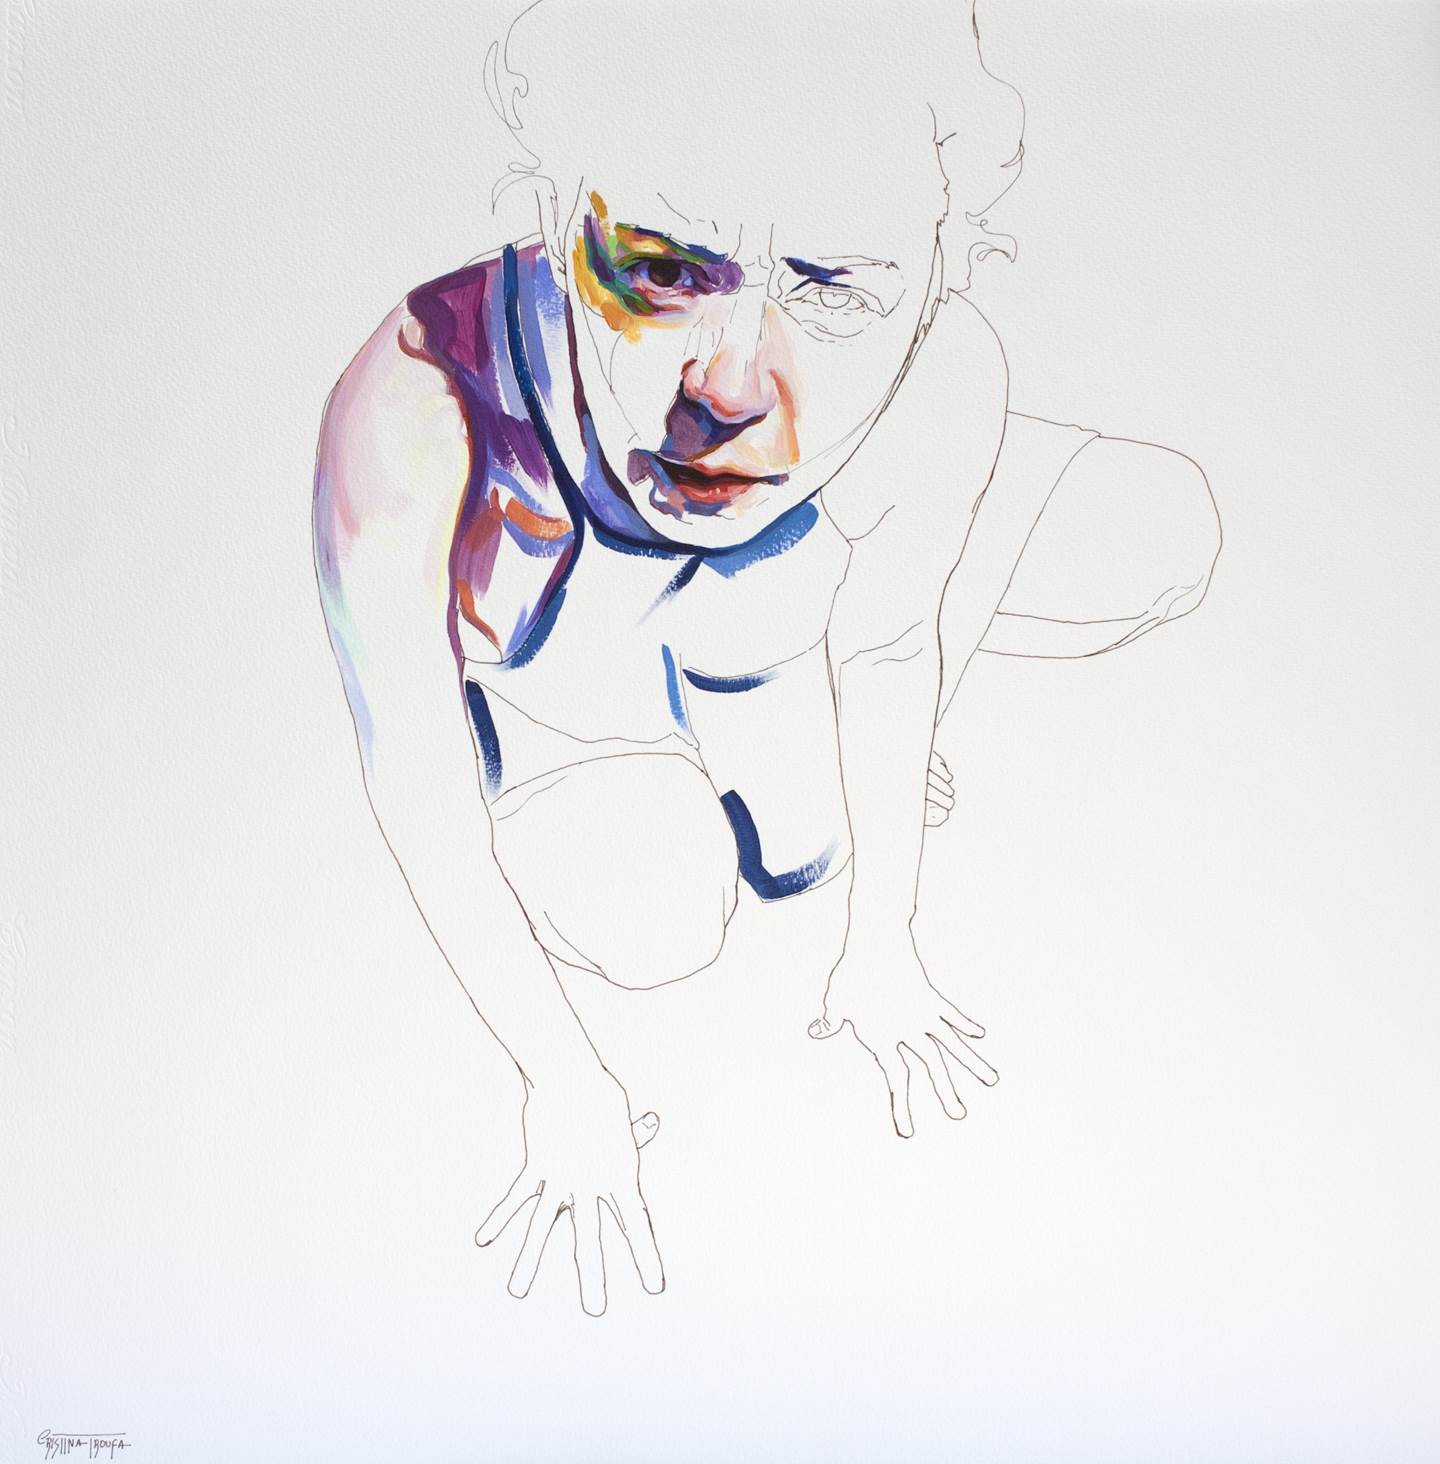 Exercício #7, original Body Acrylic Drawing and Illustration by Cristina  Troufa